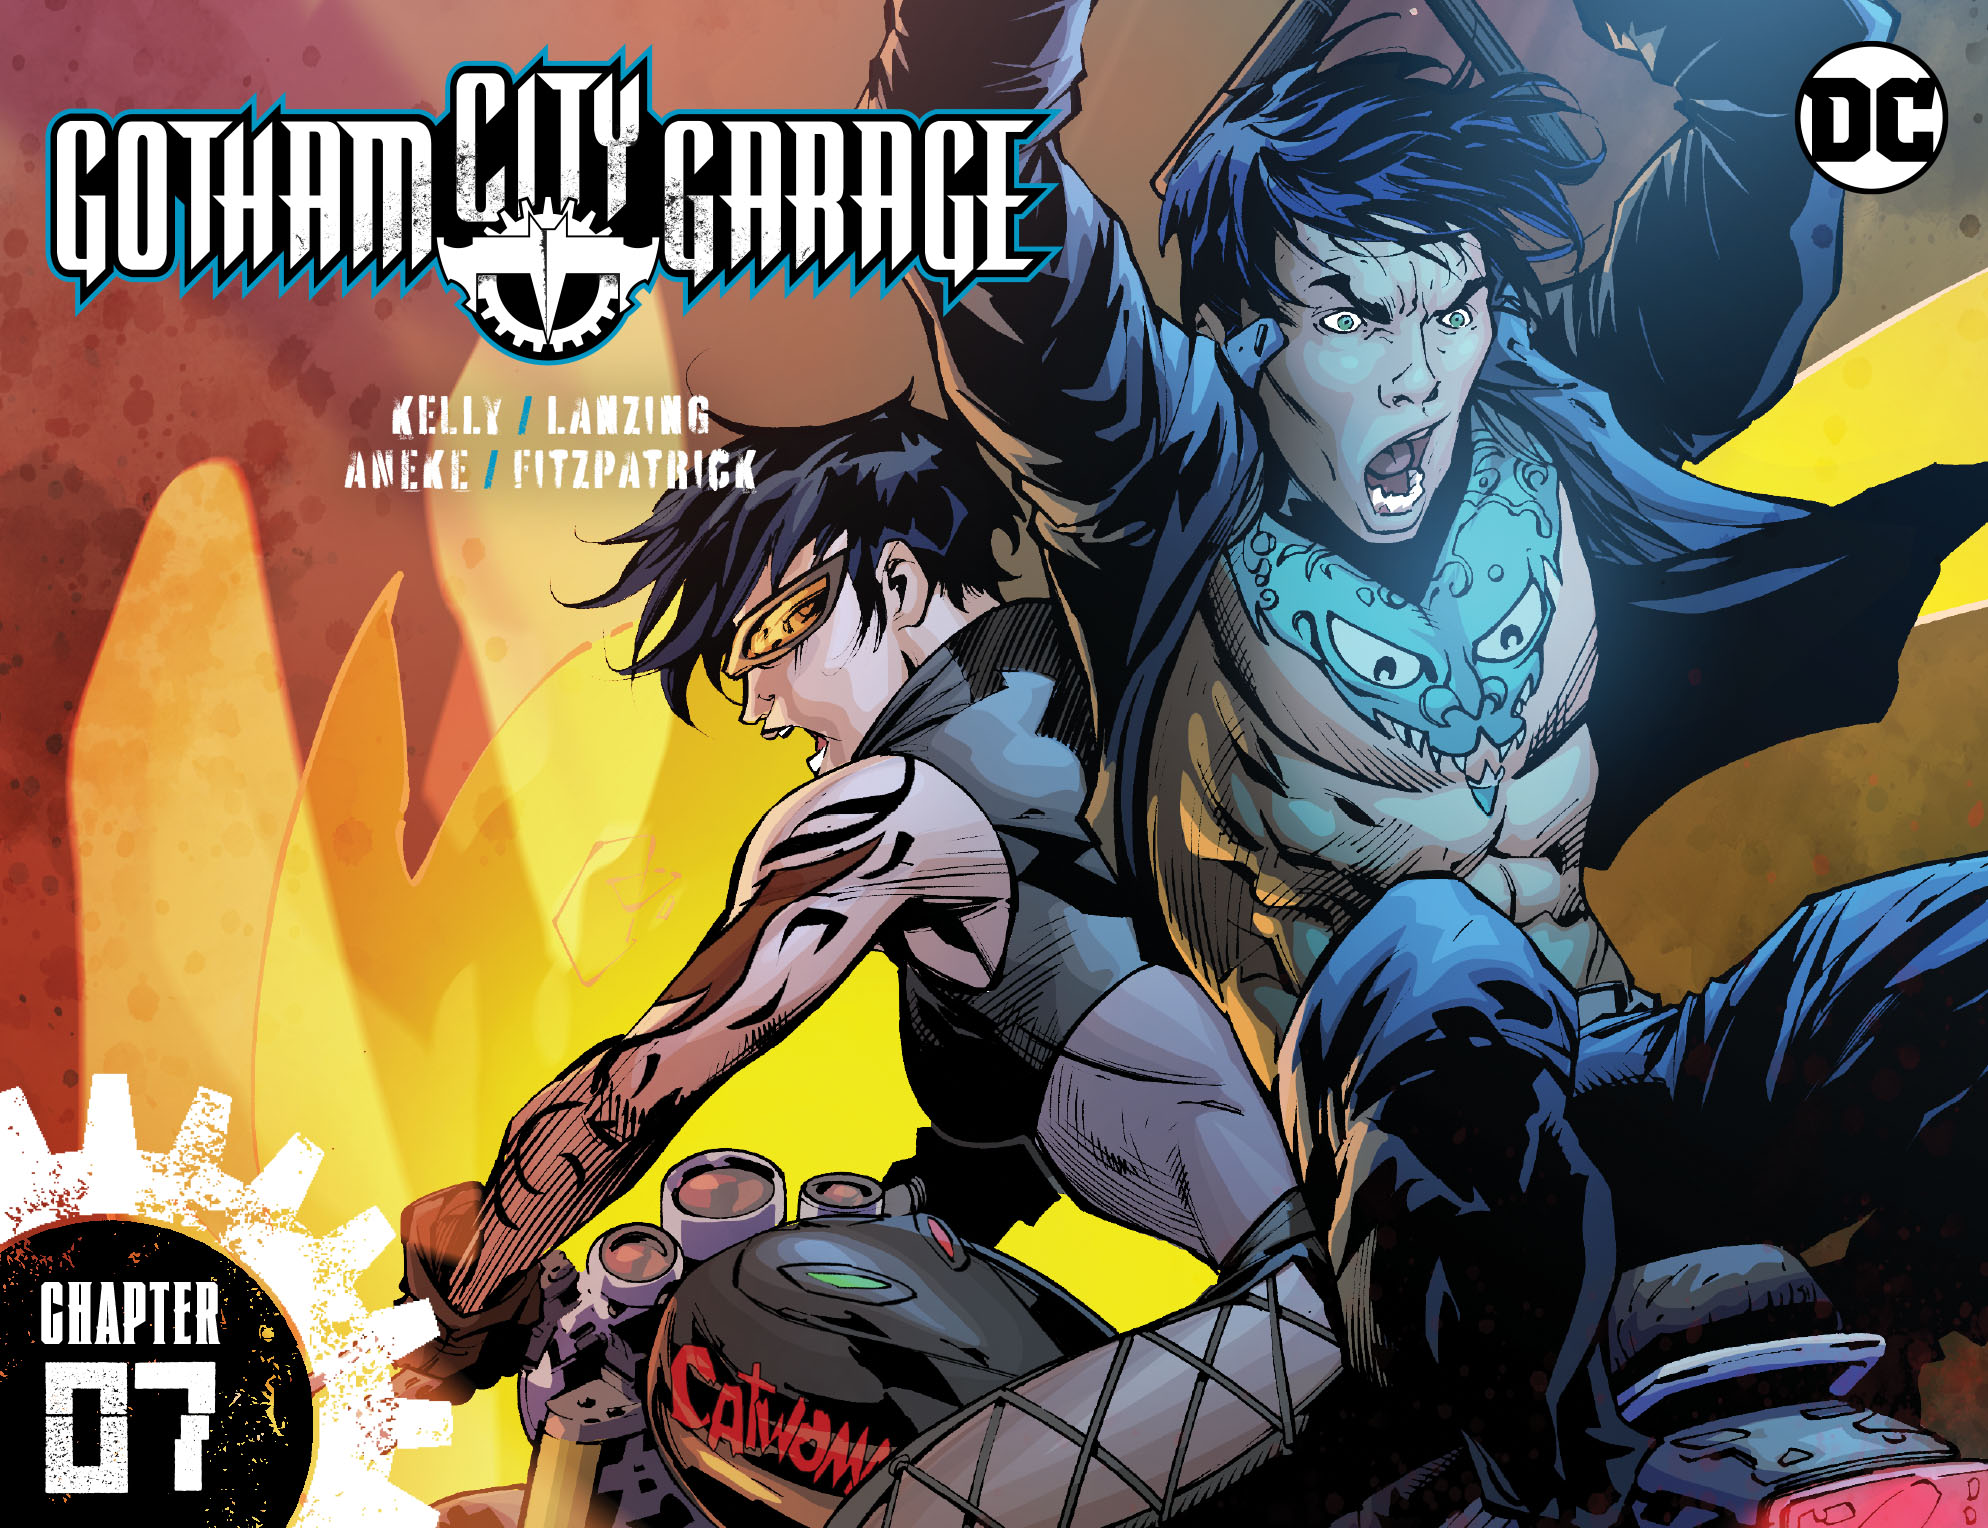 Gotham City Garage (2017-): Chapter 7 - Page 1.